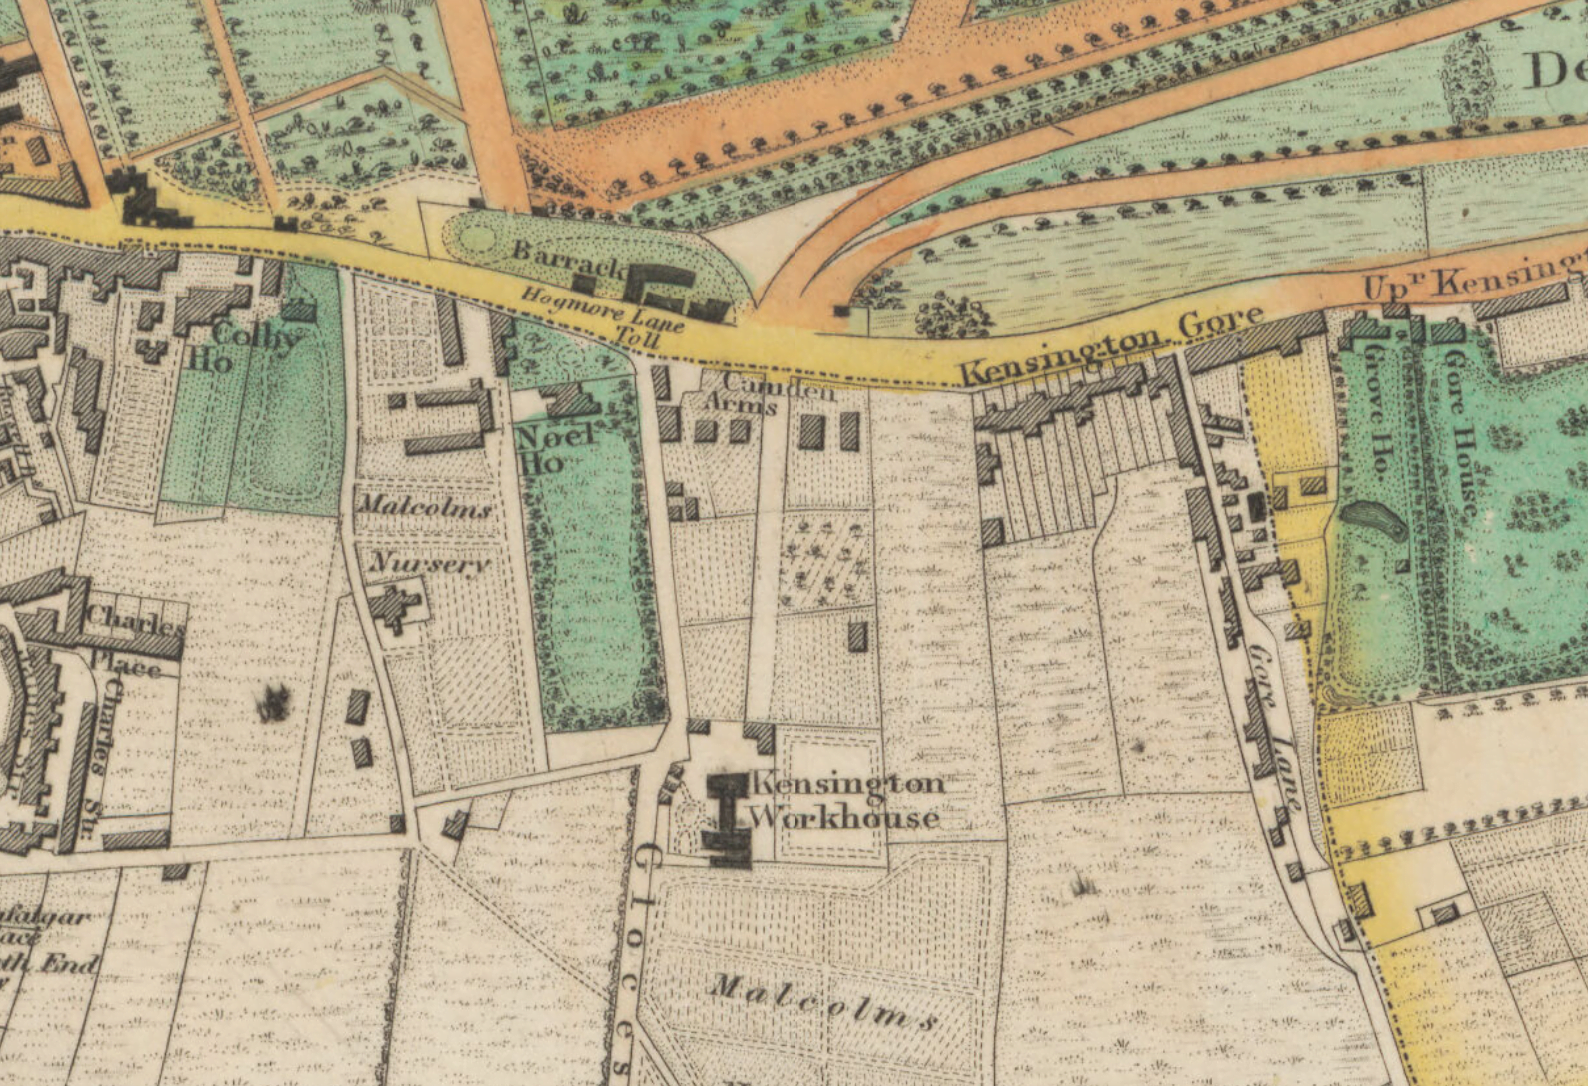 Development of Kensington Gate & Hyde Park Gate